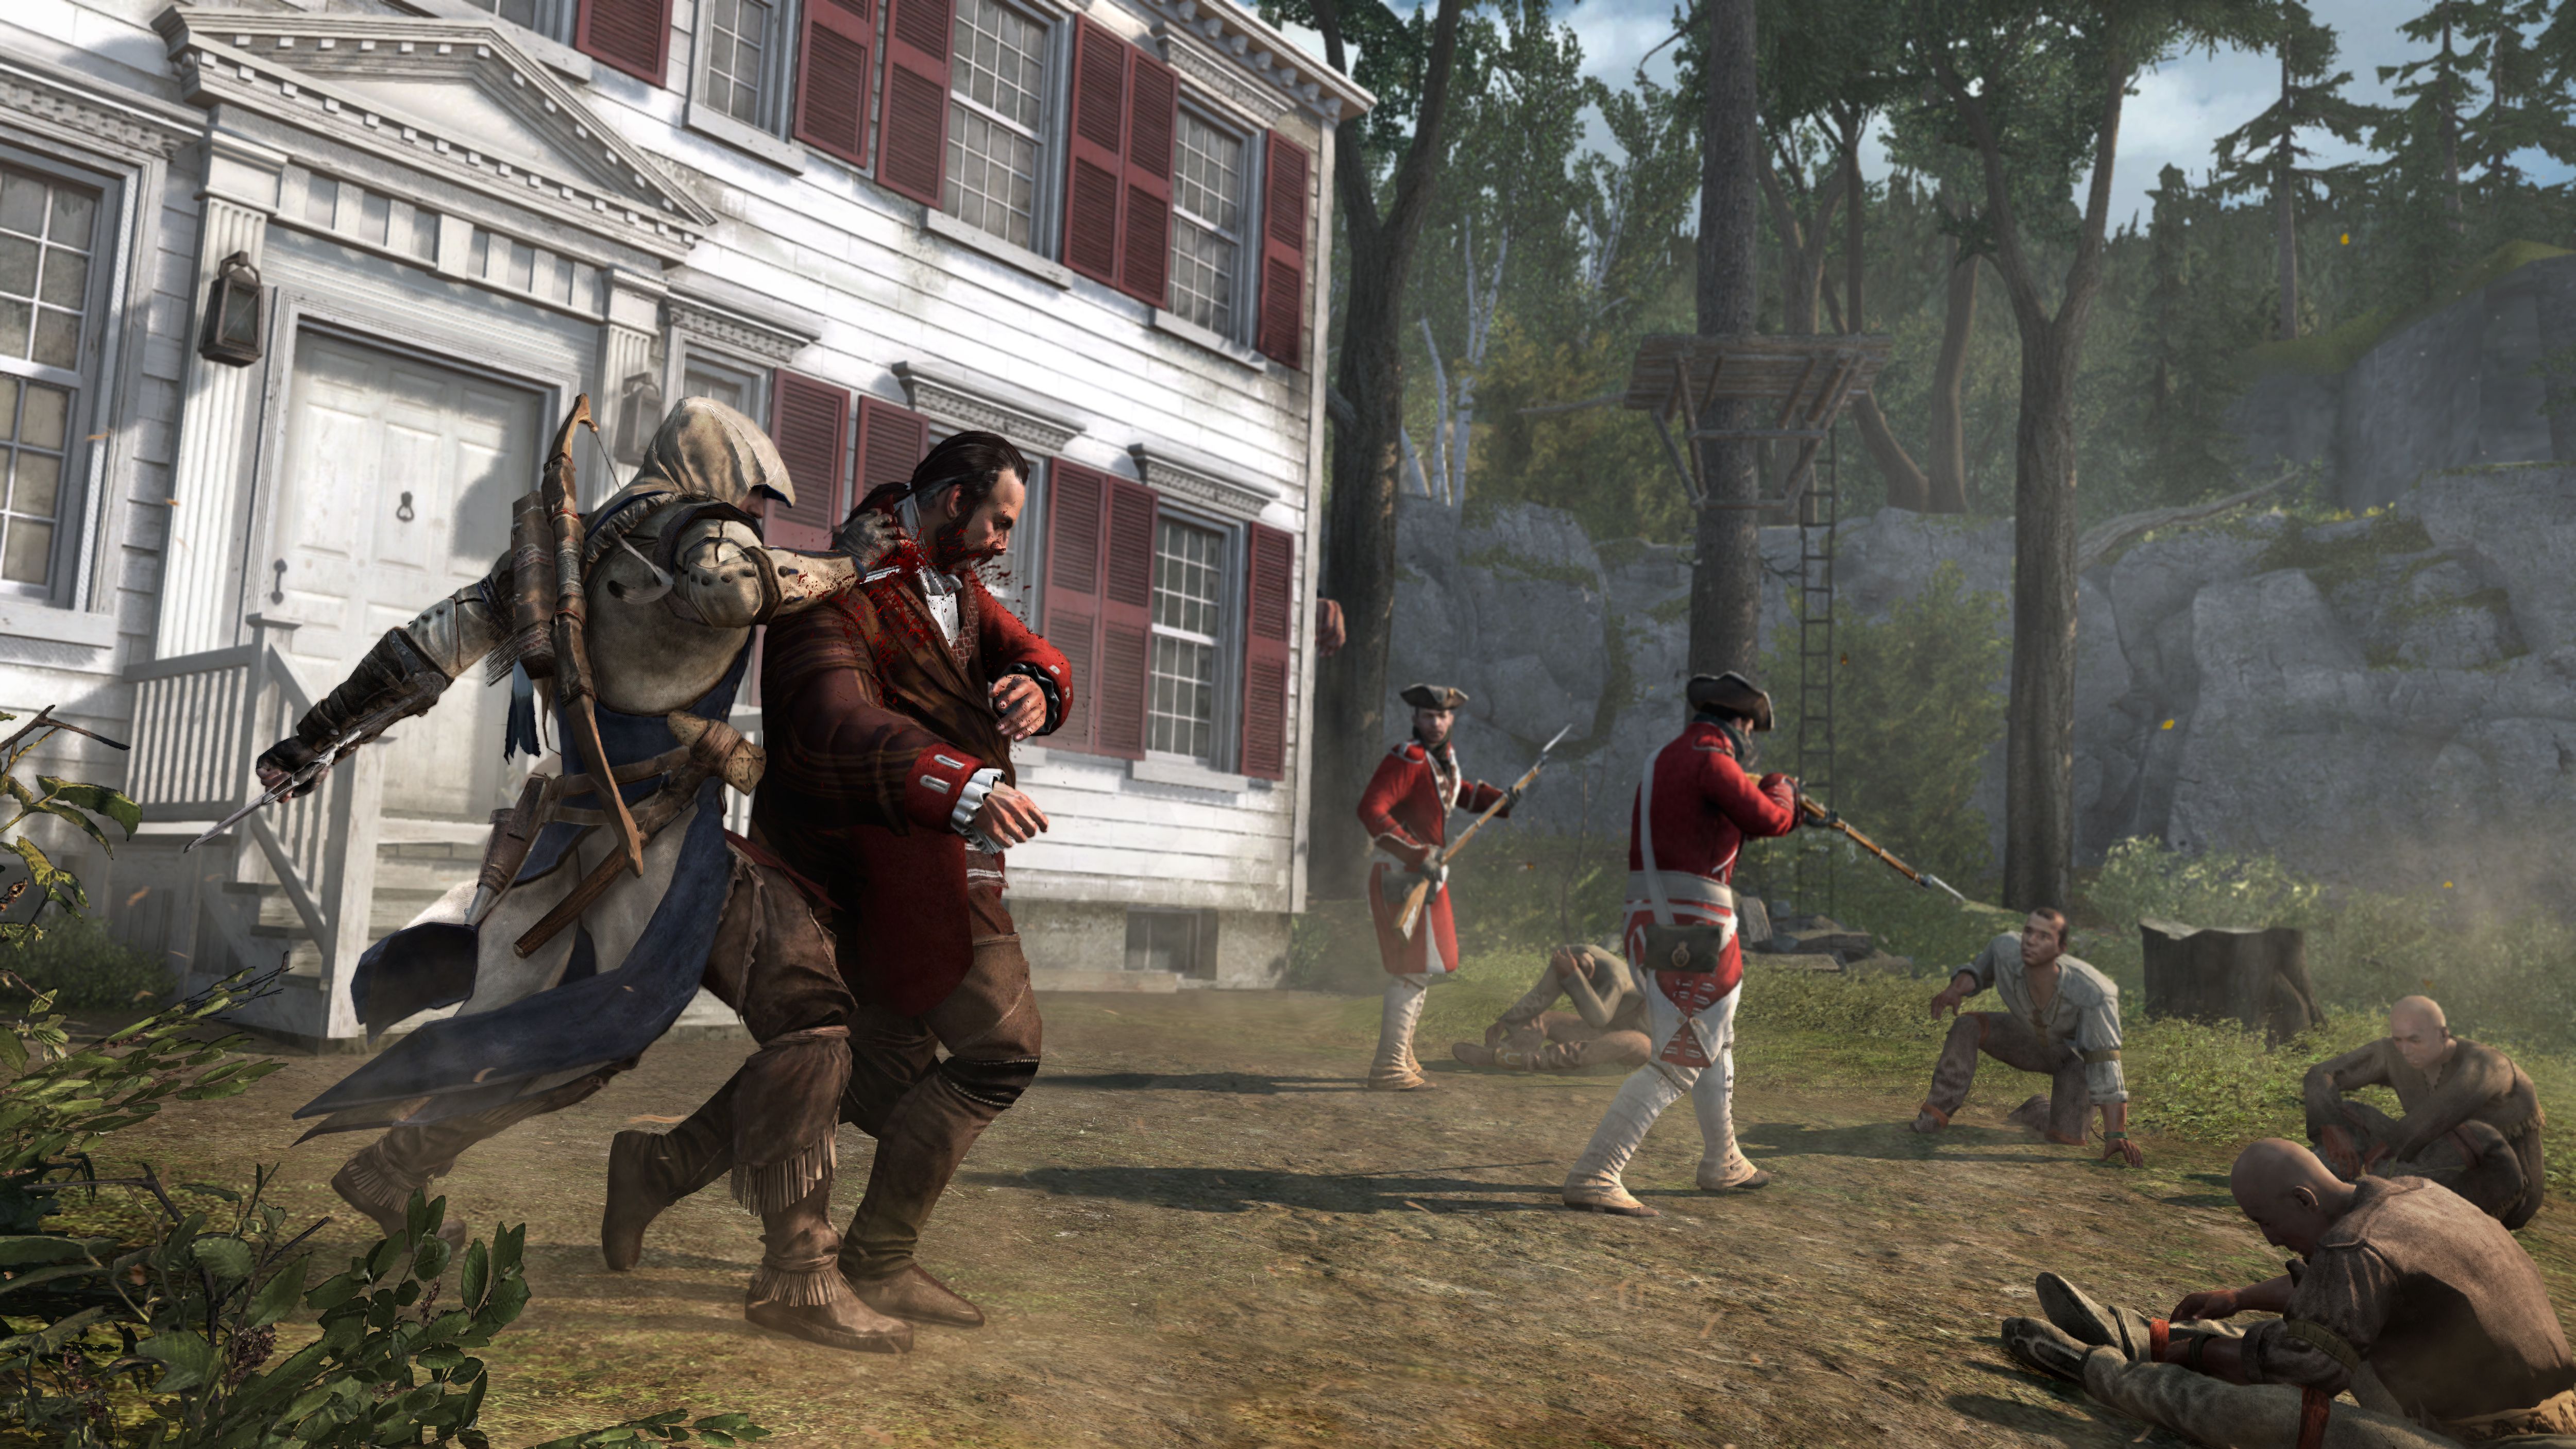 Descarga gratuita de fondo de pantalla para móvil de Muerte, Assassin's Creed Iii, Assassin's Creed, Fantasía, Sangre, Videojuego.